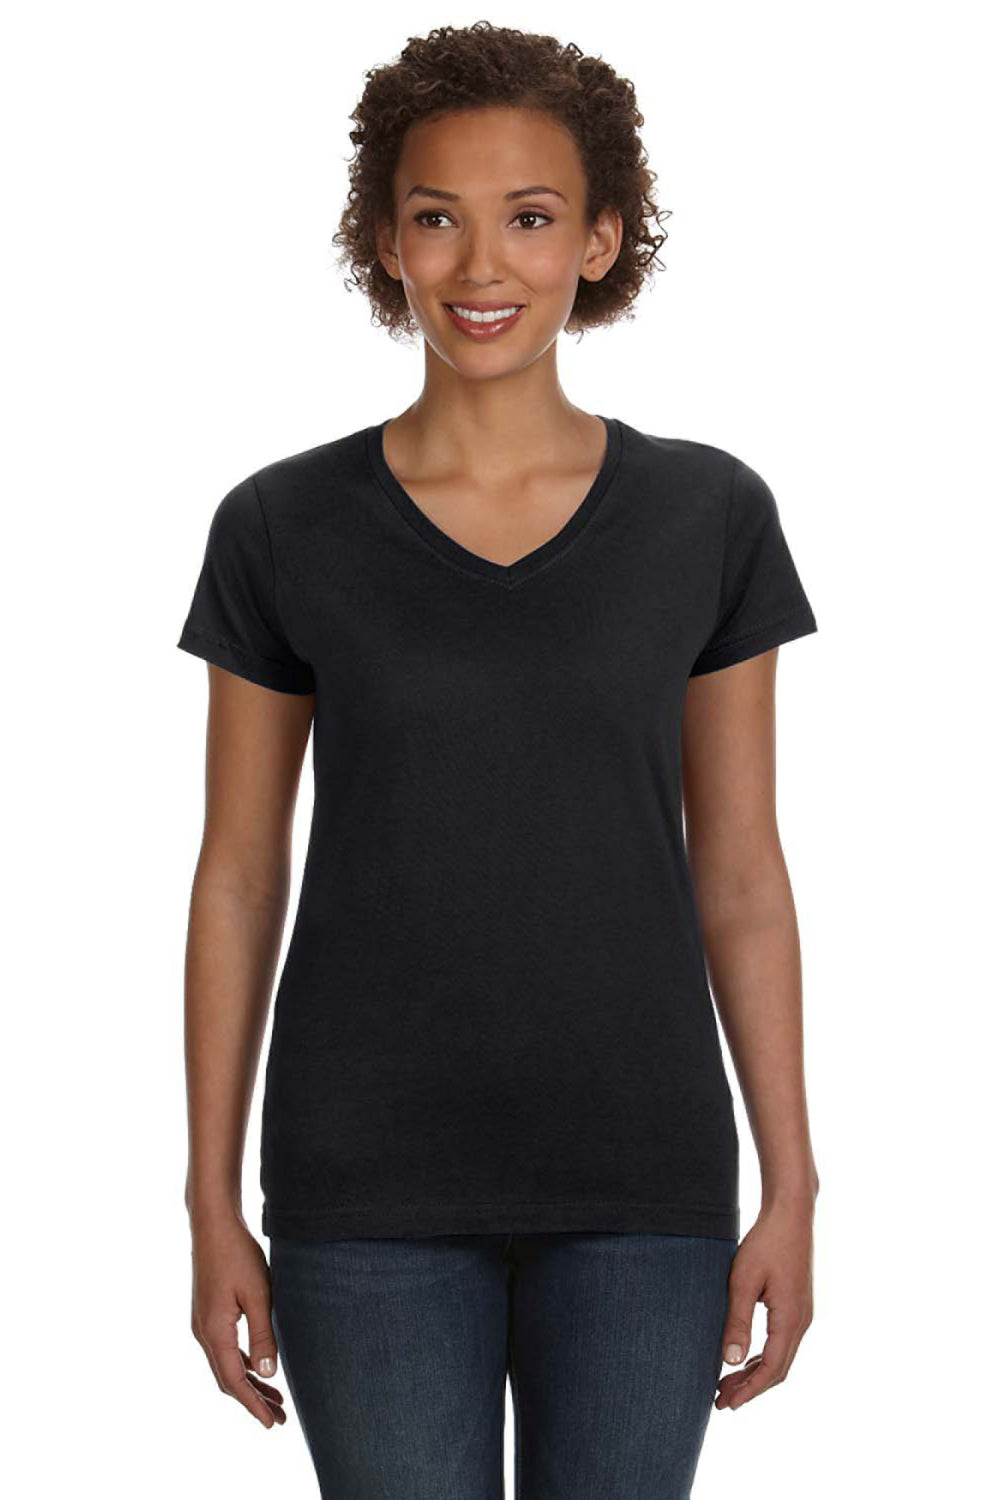 LAT 3507 Womens Fine Jersey Short Sleeve V-Neck T-Shirt Black Front